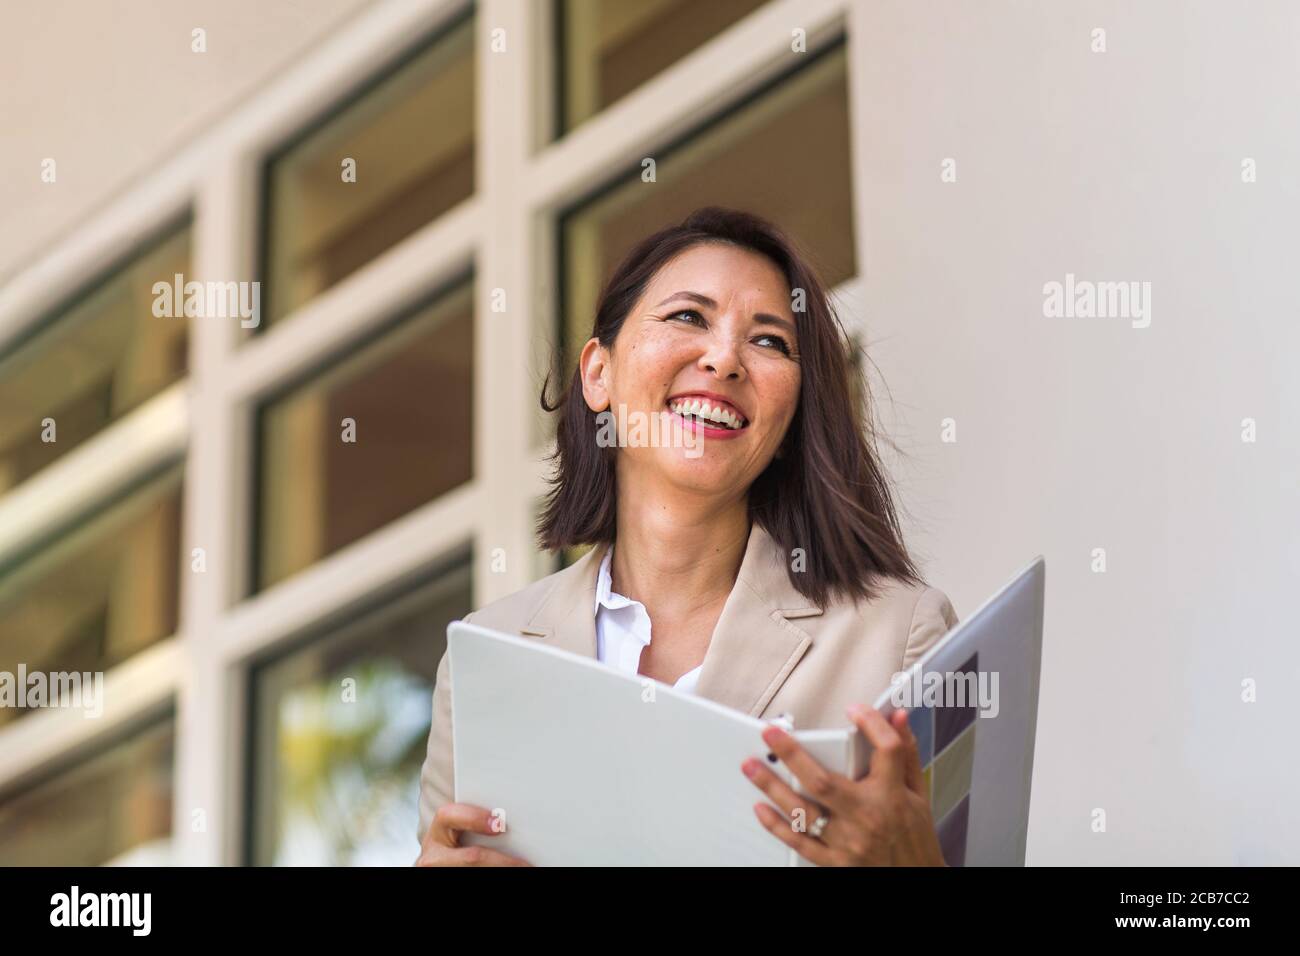 Portrait of a confident Asian businesswoman smiling. Stock Photo